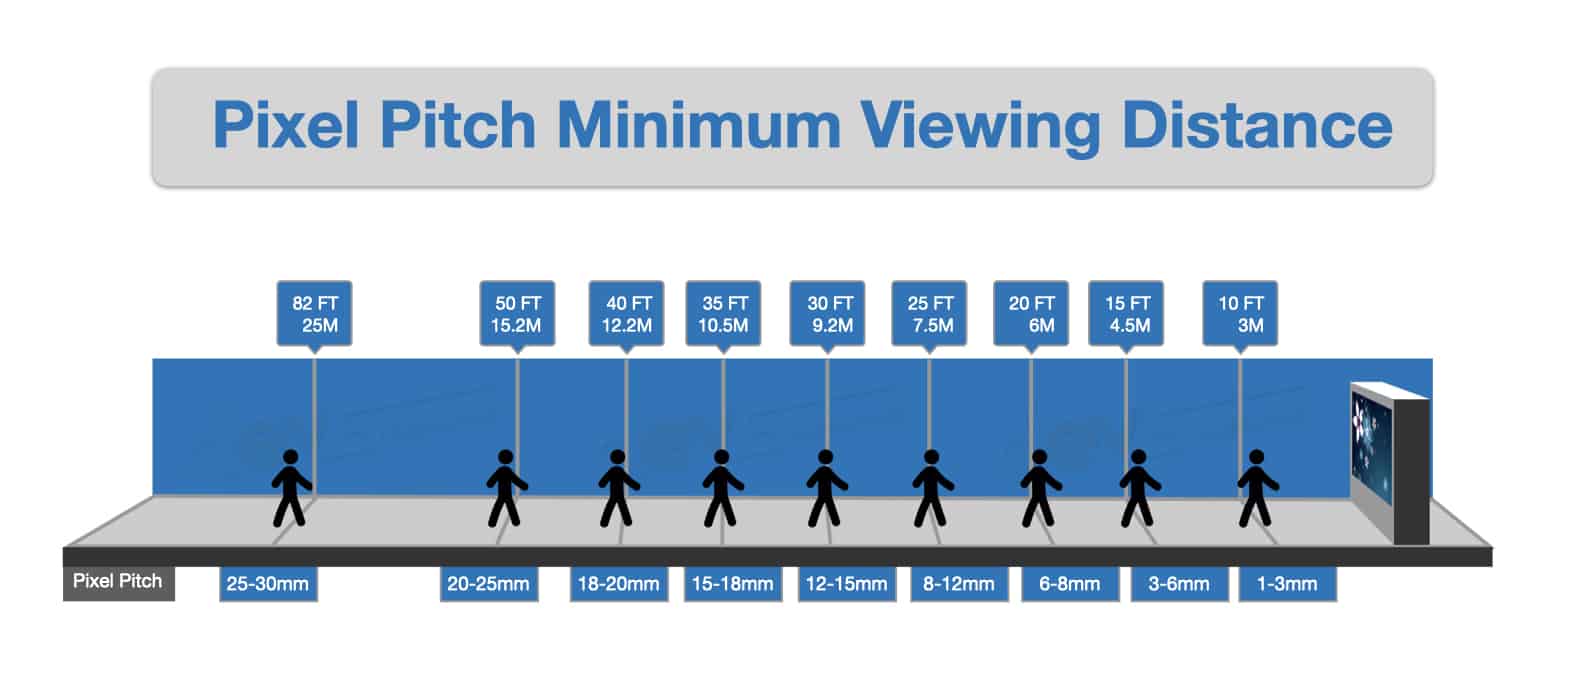 Pixel pitch minimum viewing distance